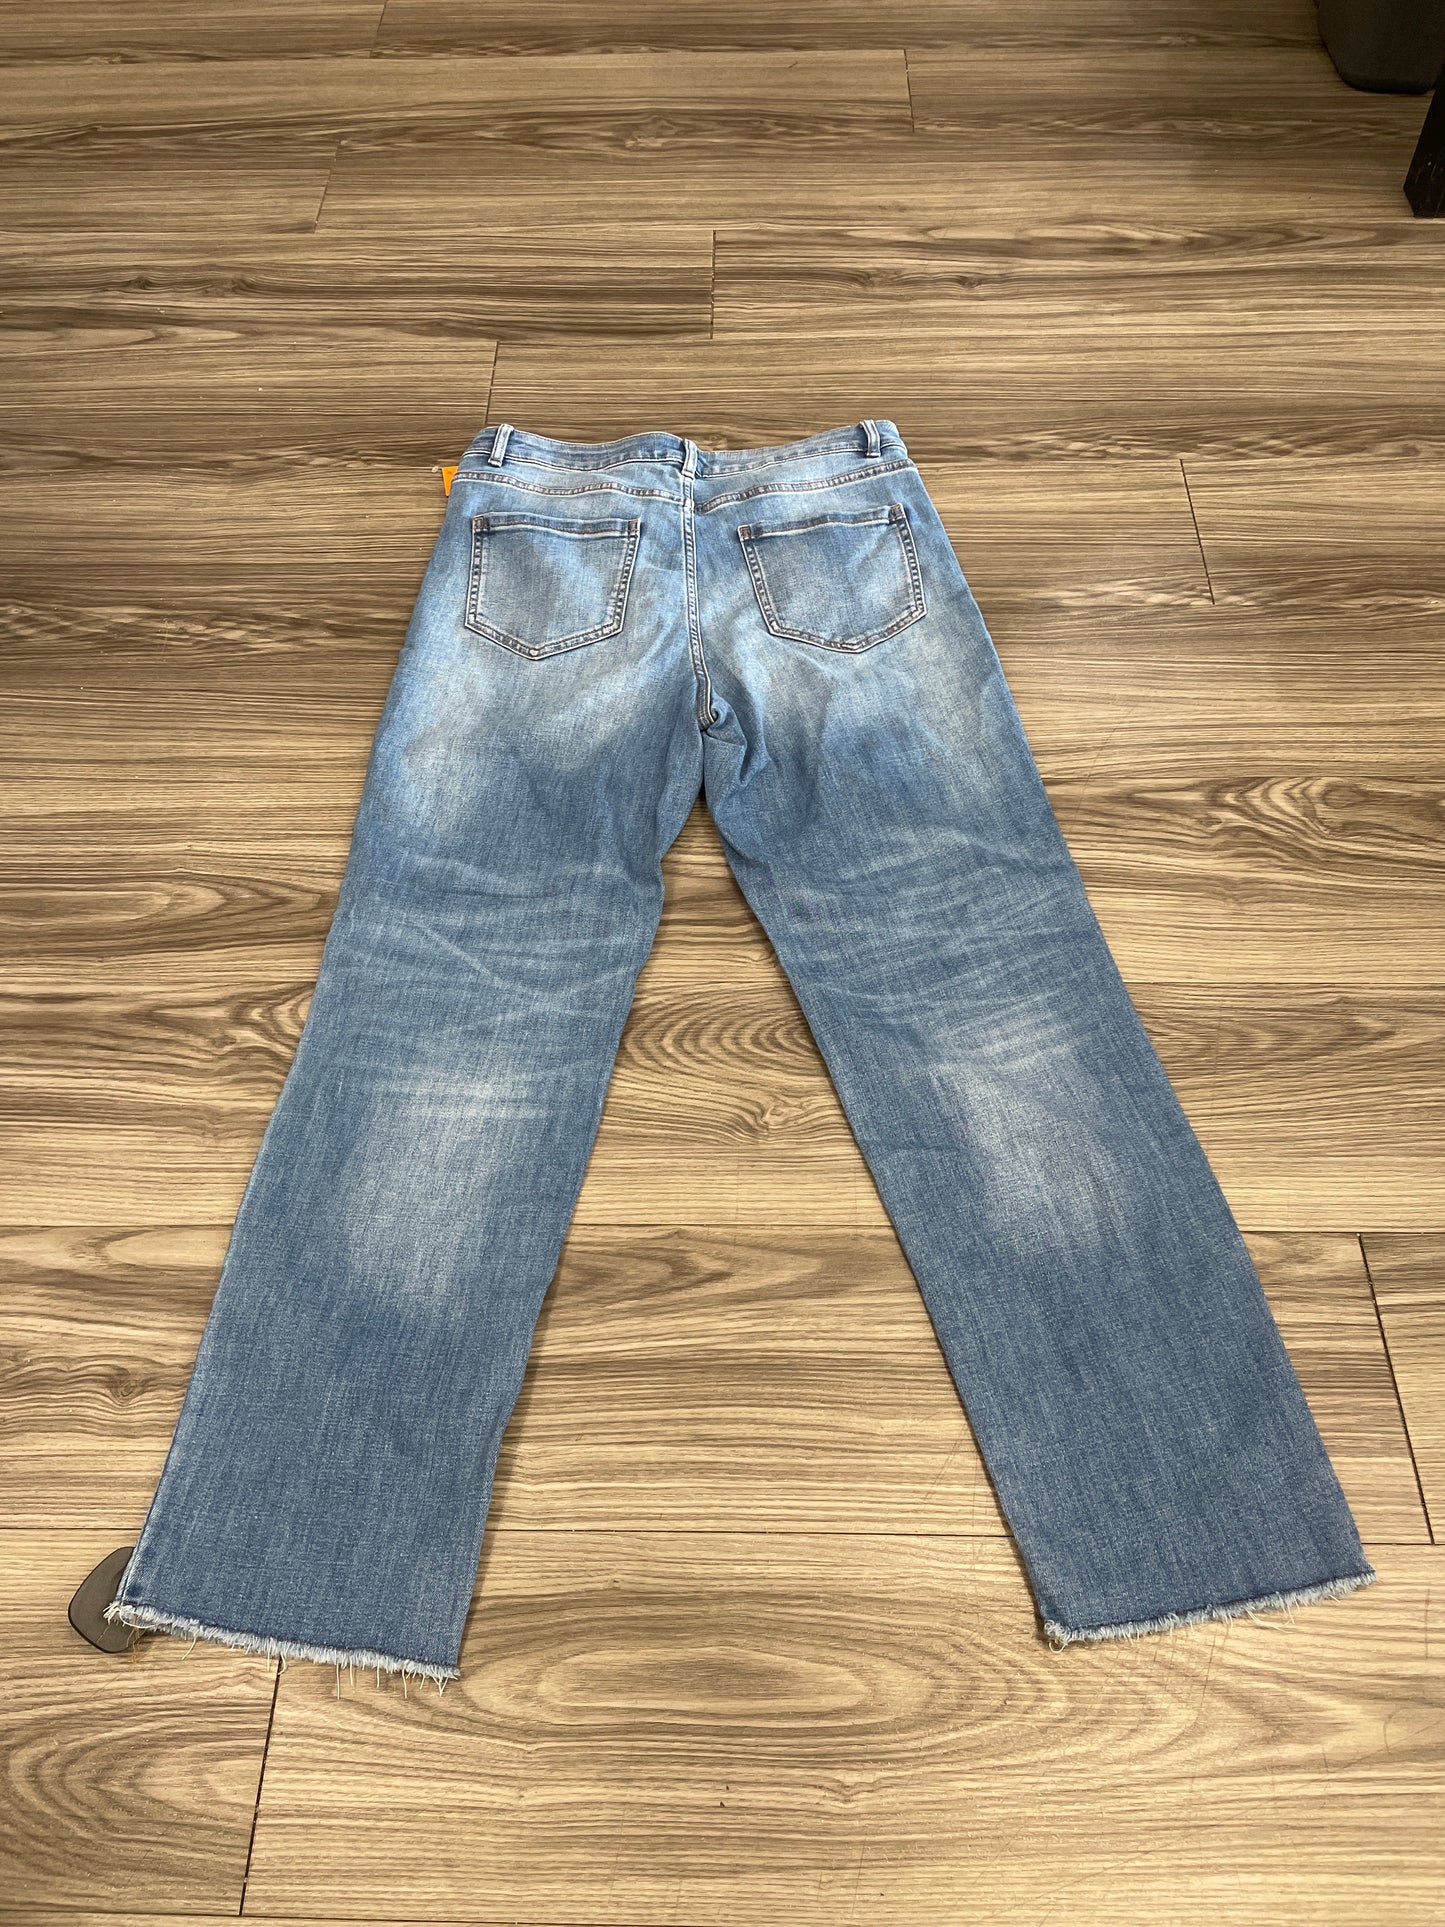 Jeans Straight By J. Jill  Size: 8tall